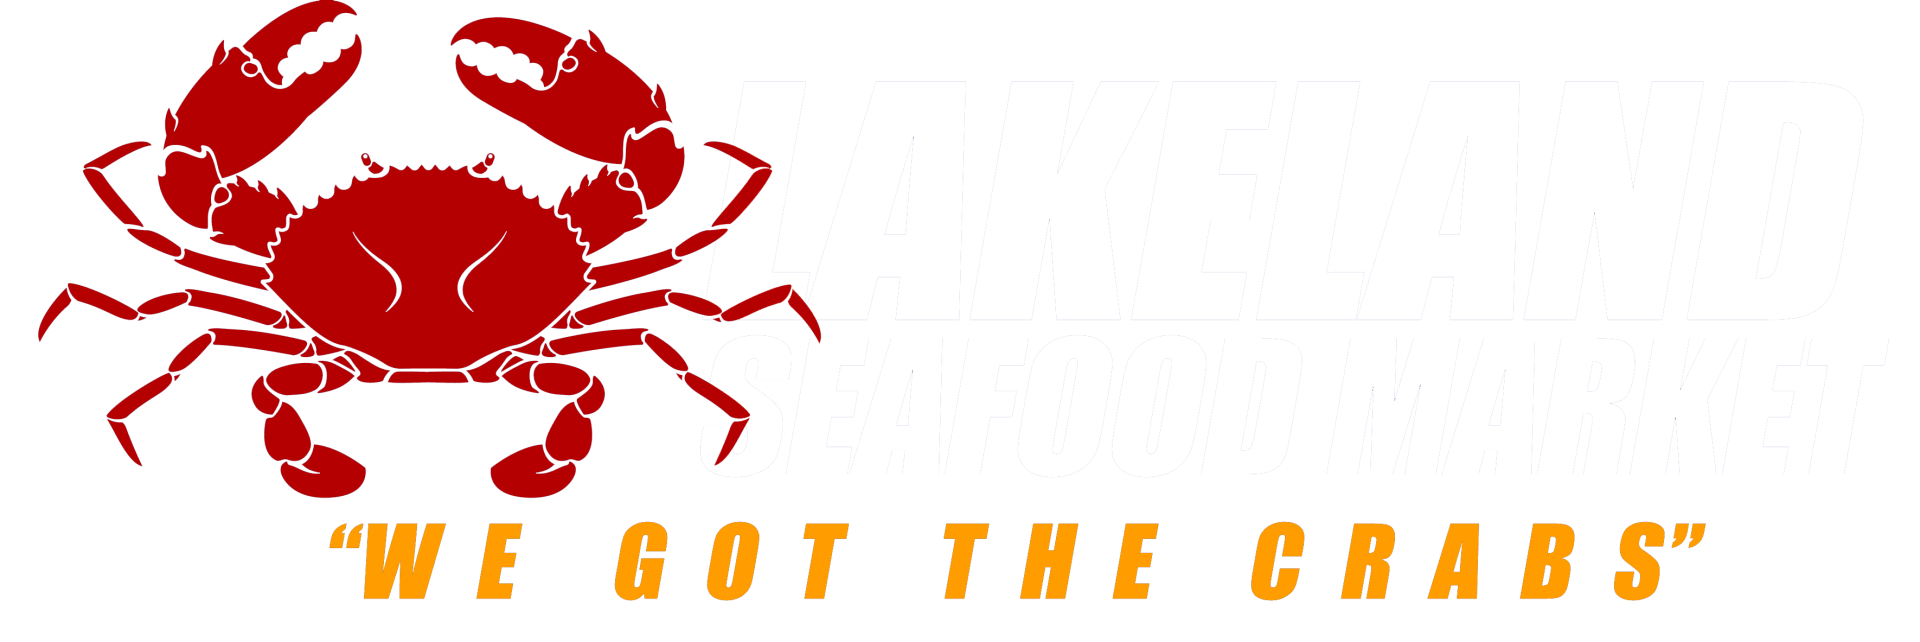 Lakeland Seafood Market